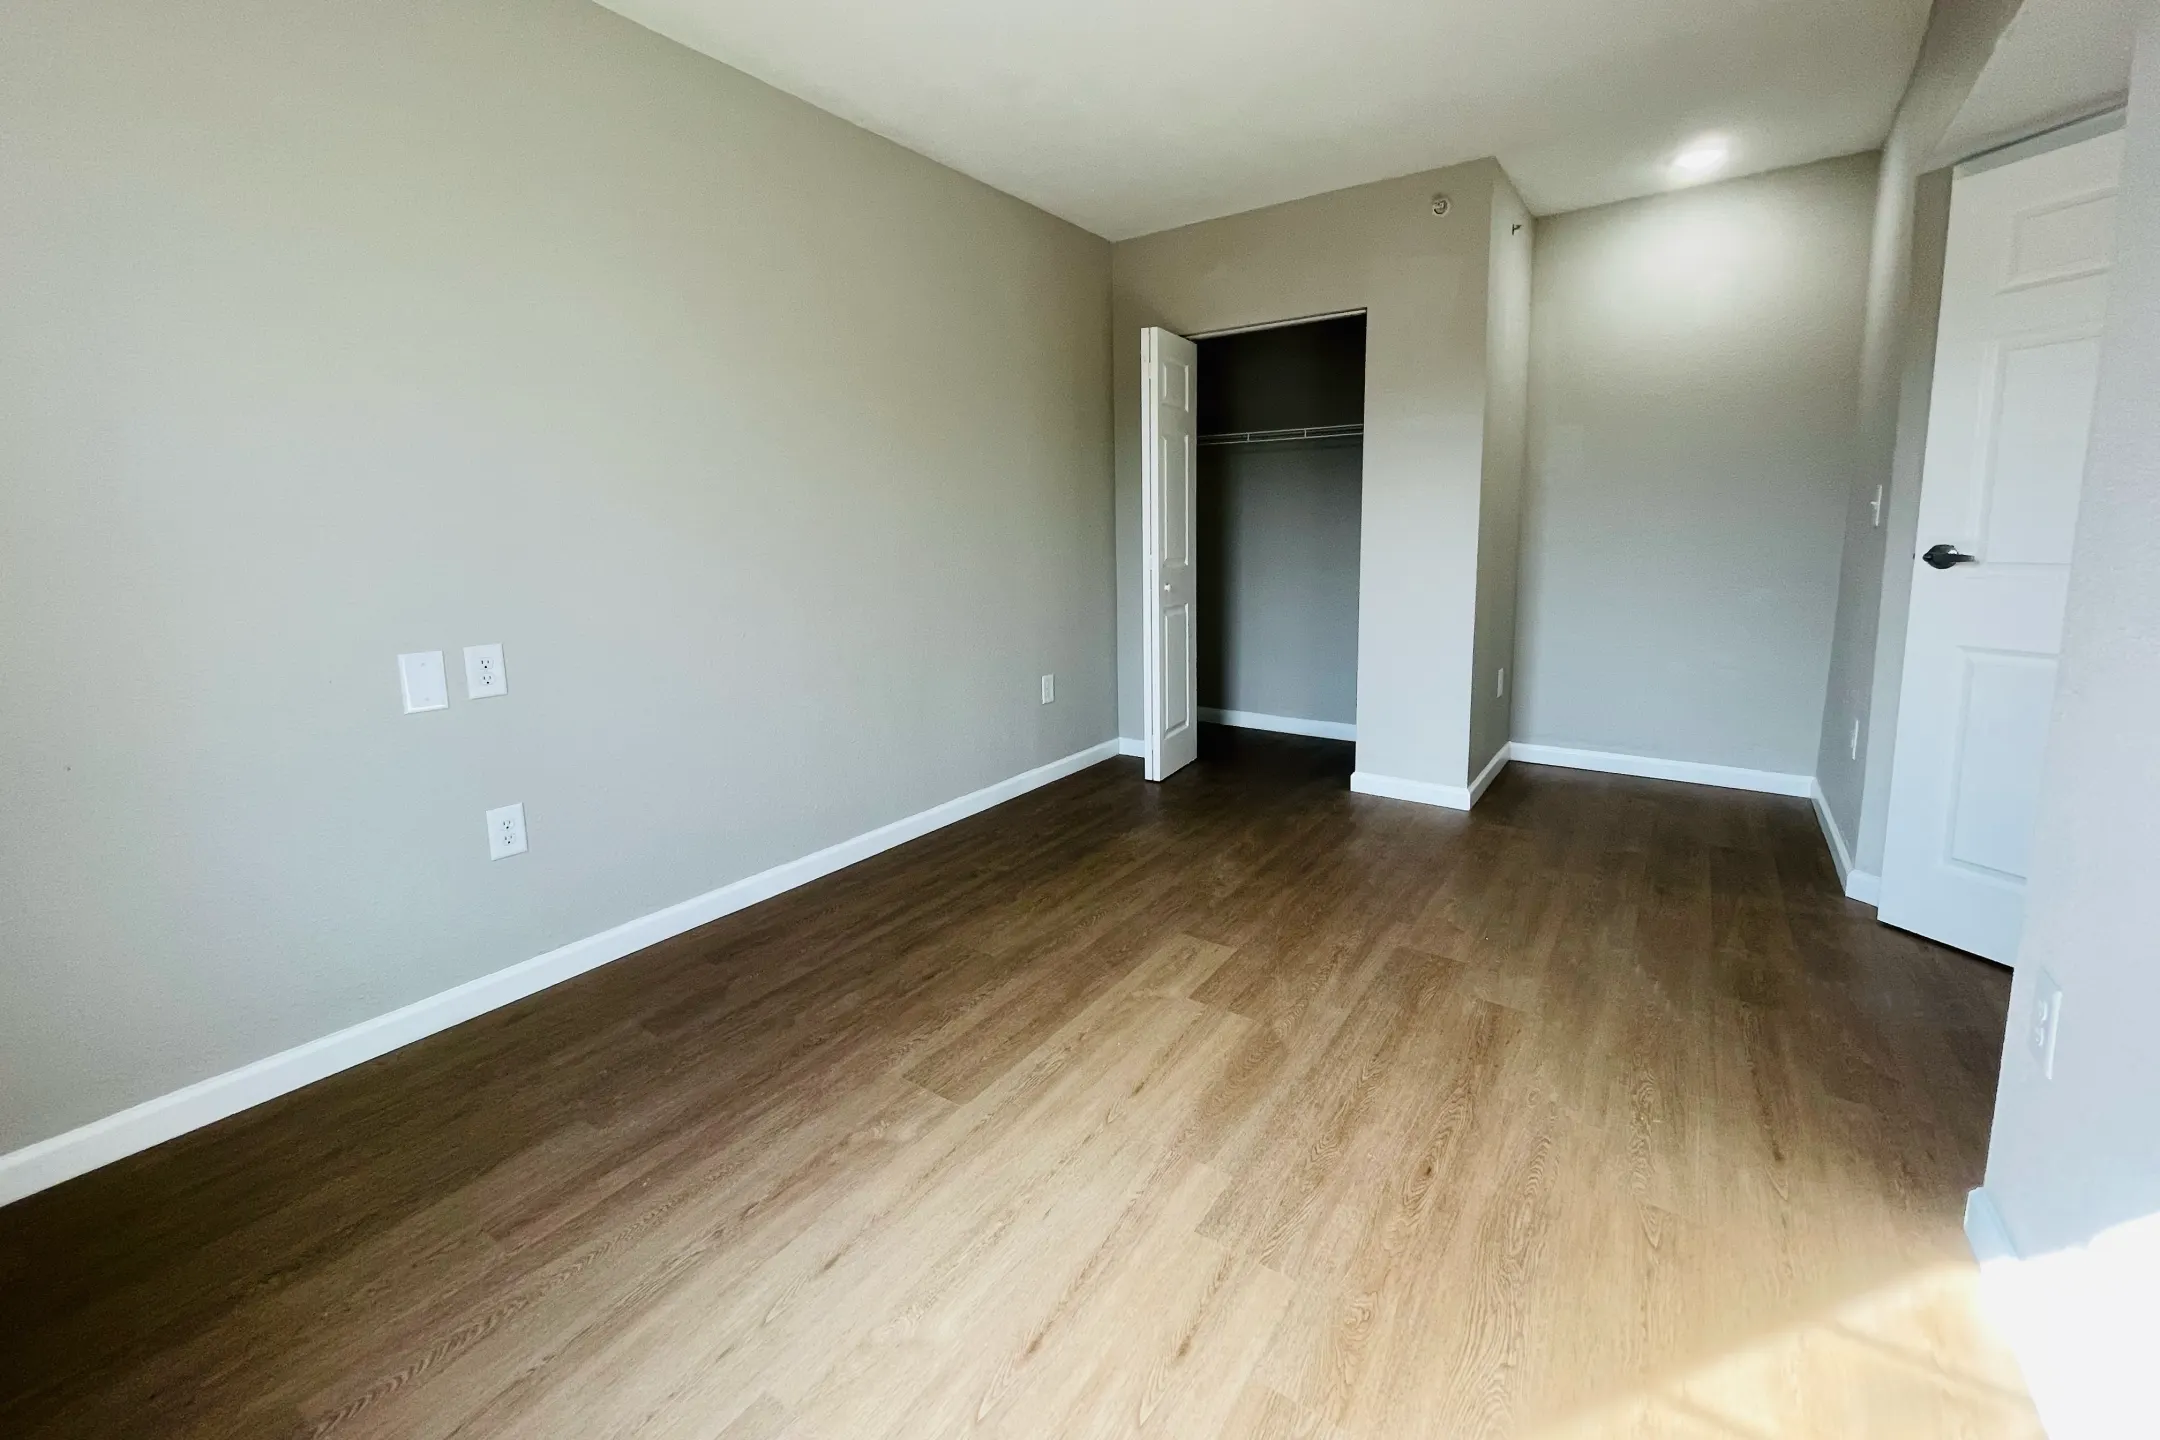 Living Room - Flats at 87Ten - Charlotte, NC